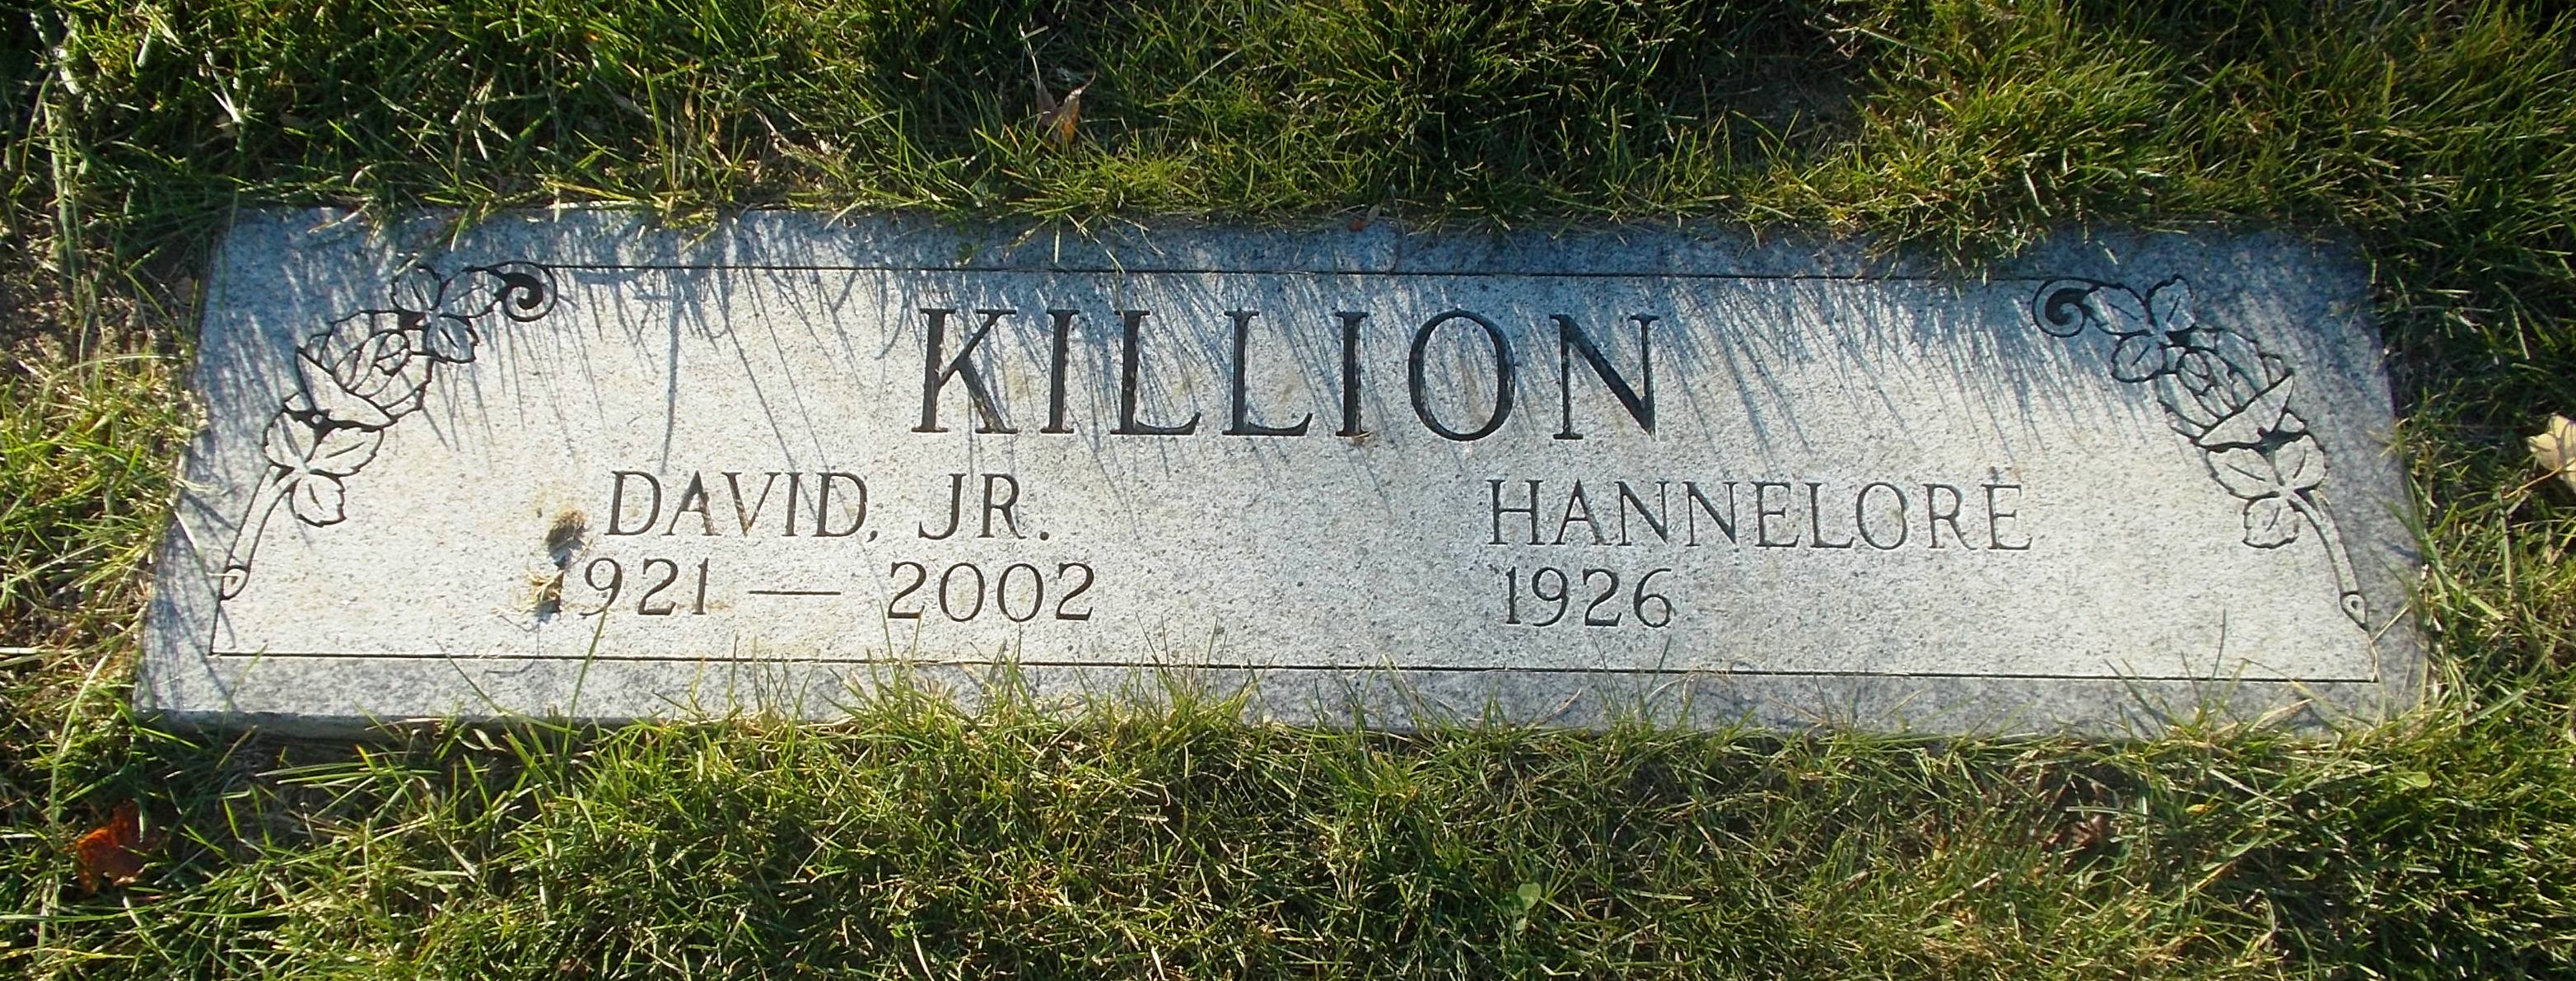 David Killion, Jr